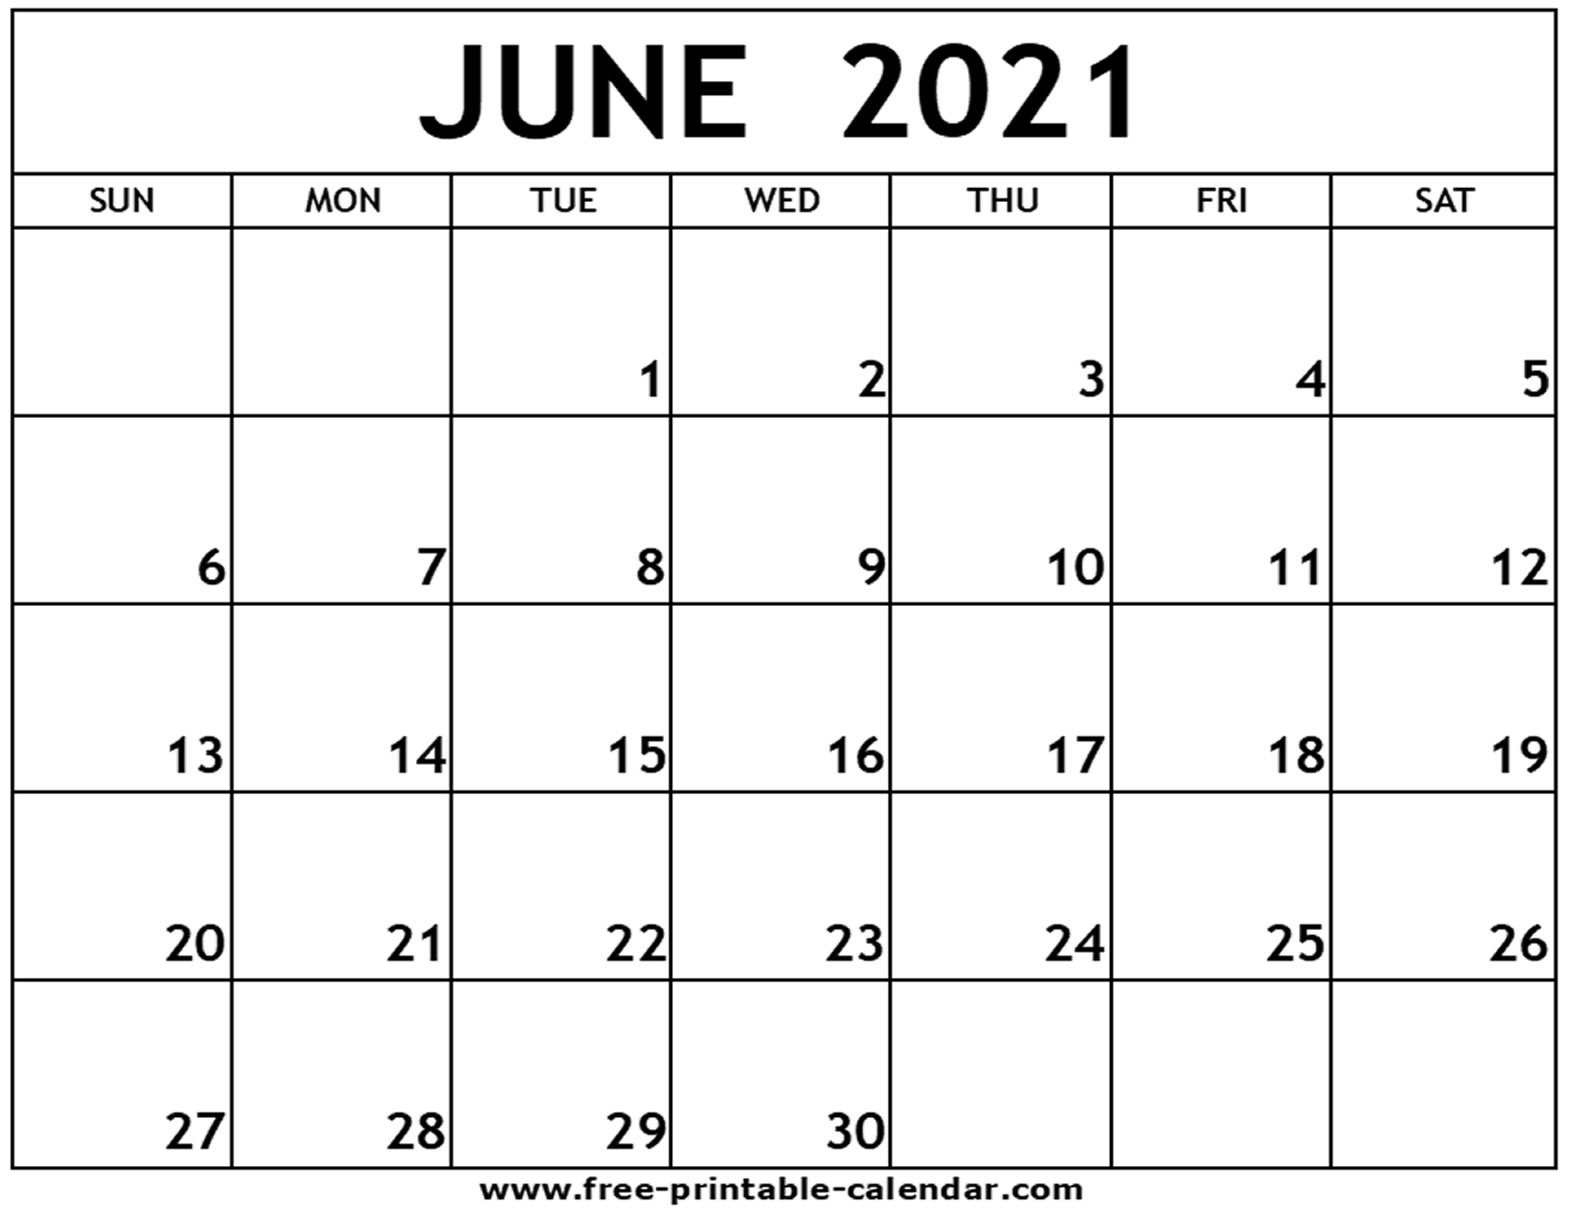 June 2021 Printable Calendar - Free-Printable-Calendar June 2021 Printable Monthly Calendar With Lines